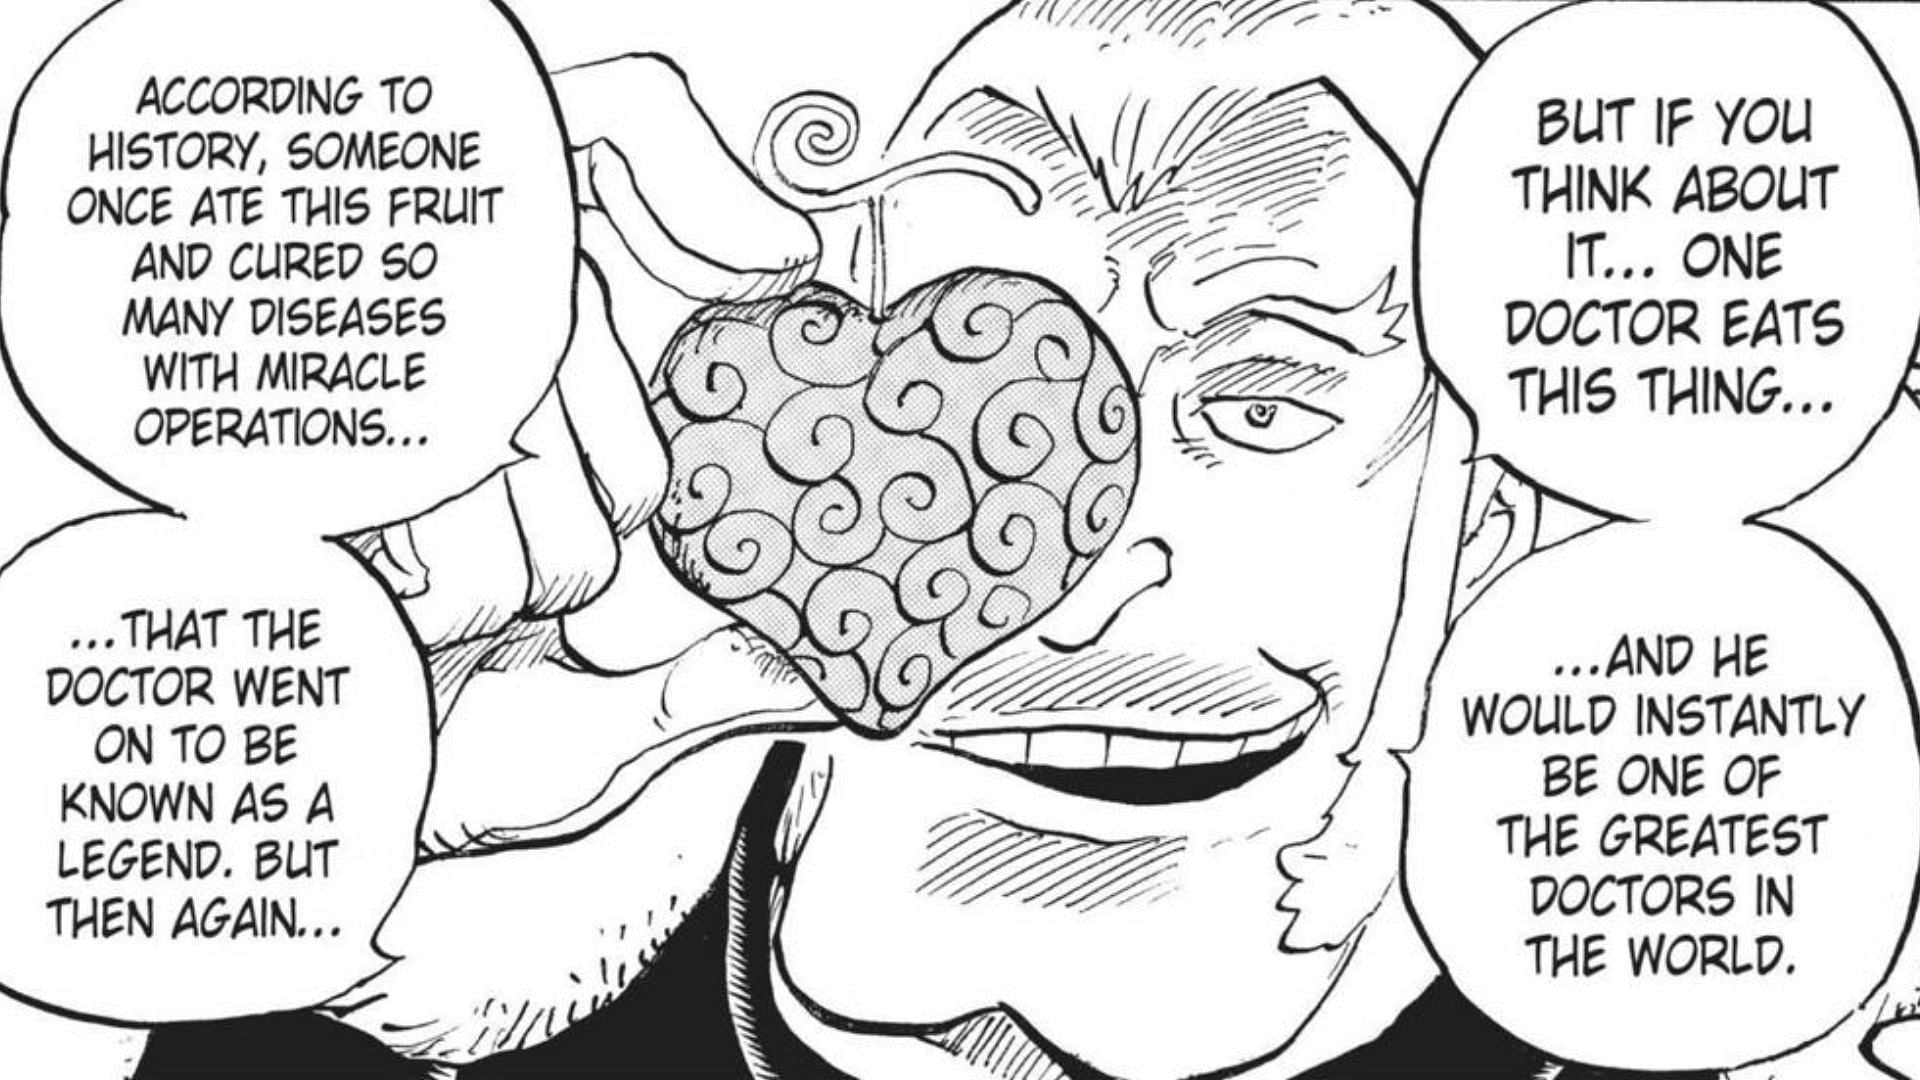 Manga panel from One Piece chapter 765 (Image via Shueisha)